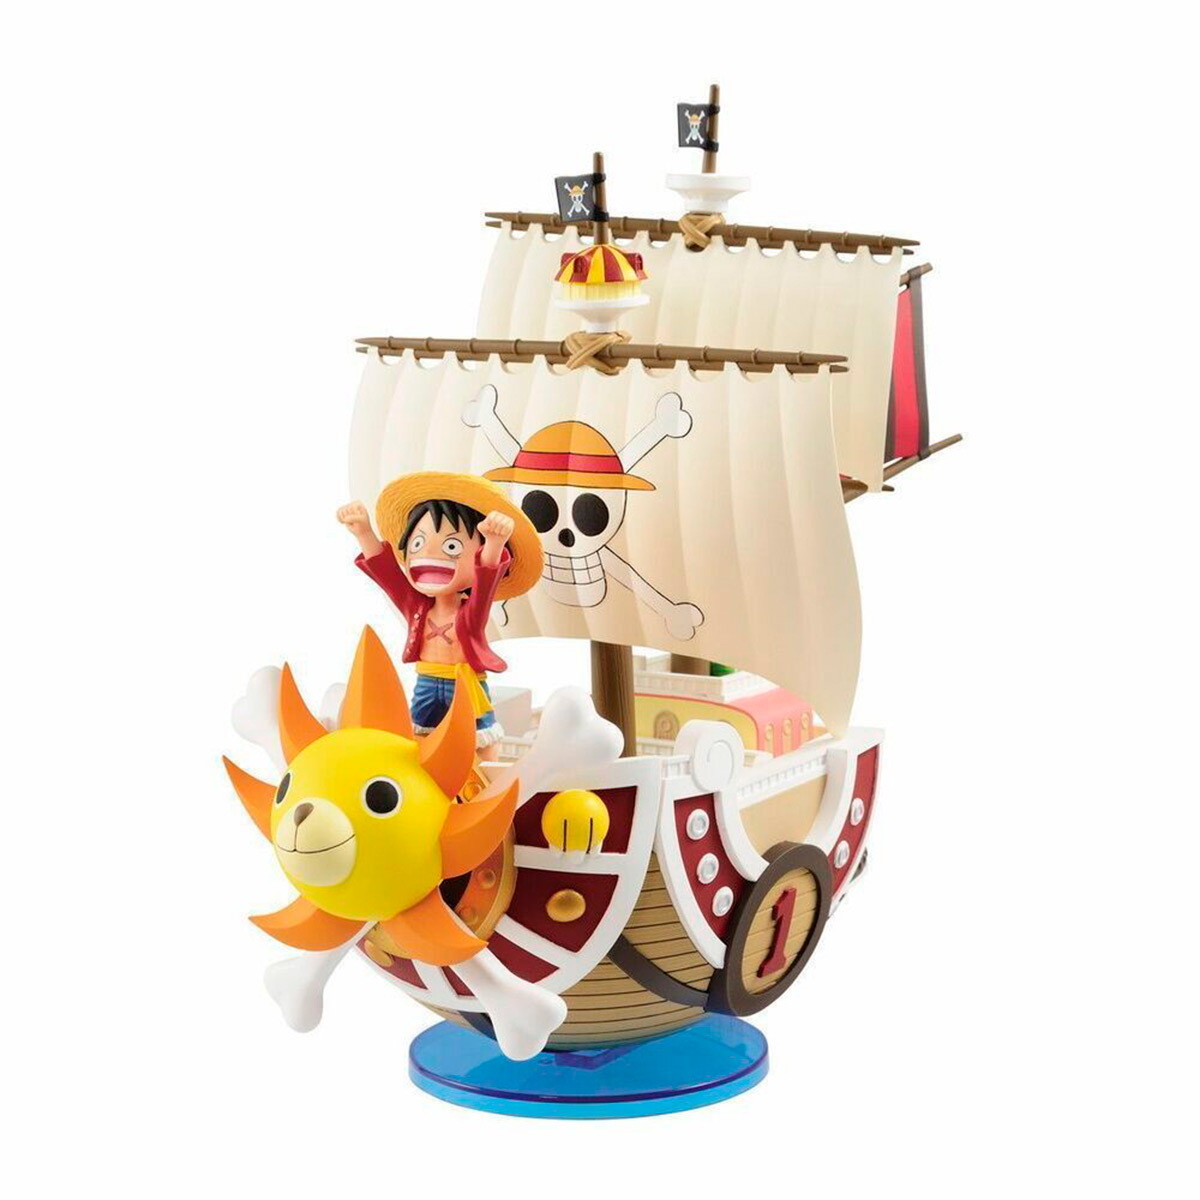 Action Figure - One Piece WCF - Mega World Collectable Figure - Thousand Sunny Ship - Bandai Banpresto 27187/27188